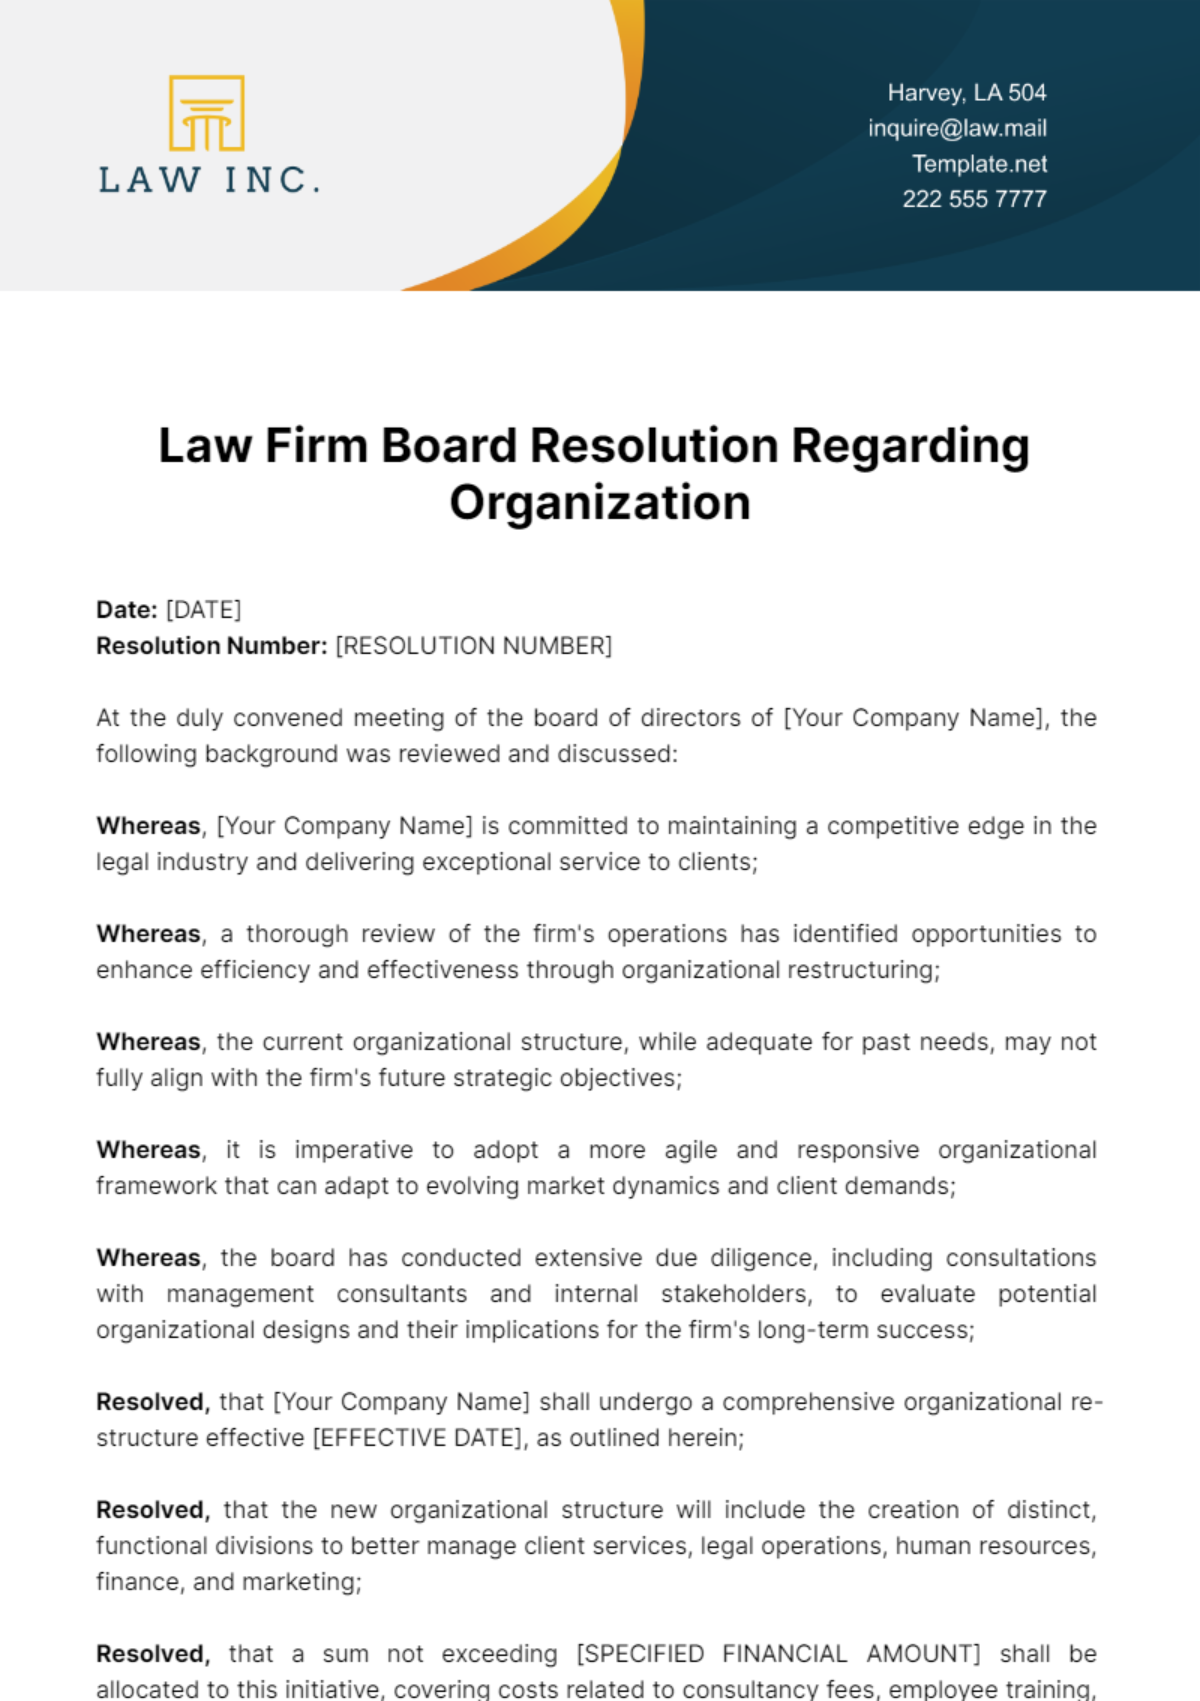 Free Law Firm Board Resolution Regarding Organization Template